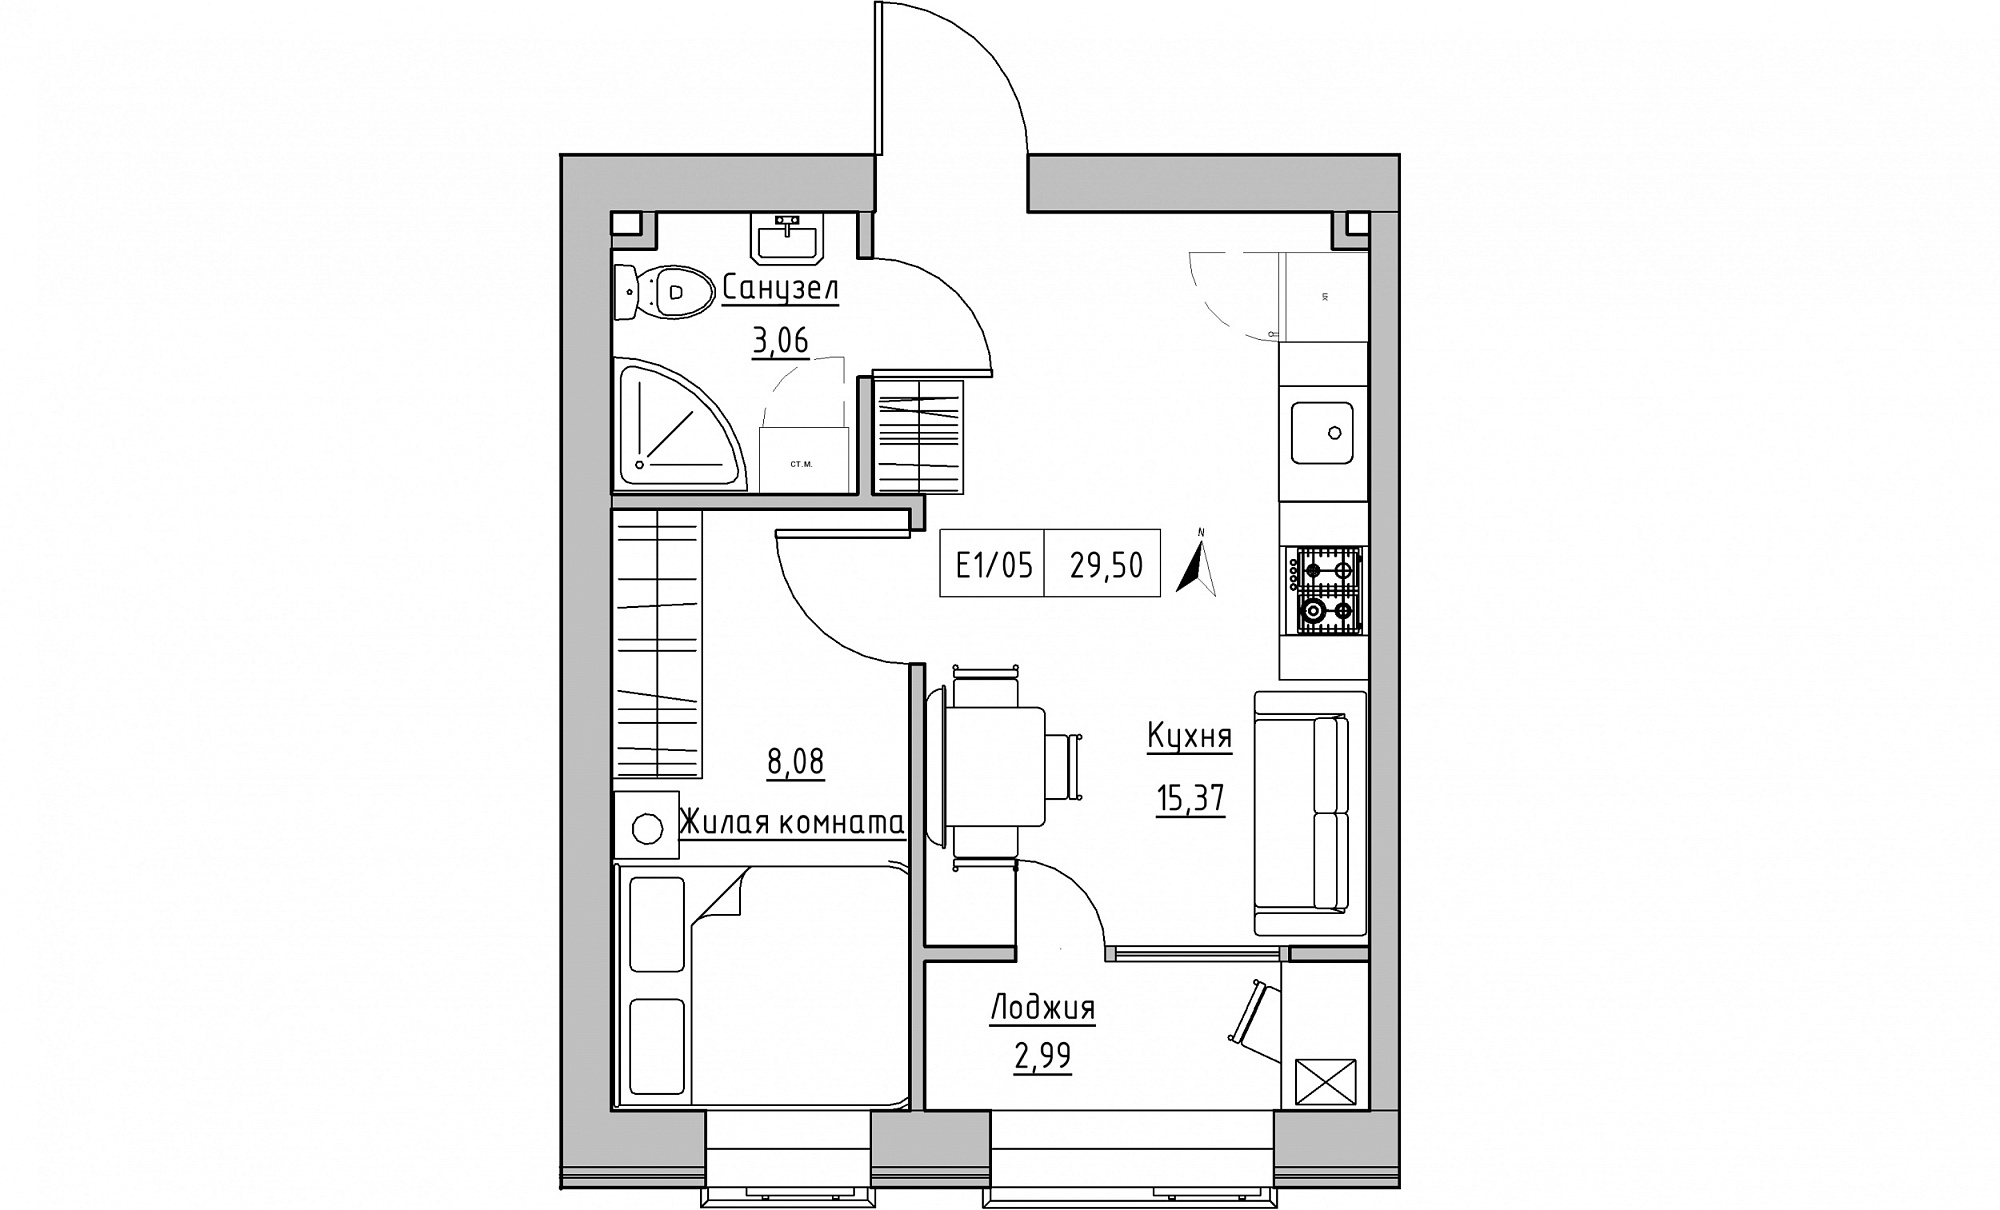 Planning 1-rm flats area 29.5m2, KS-015-04/0010.